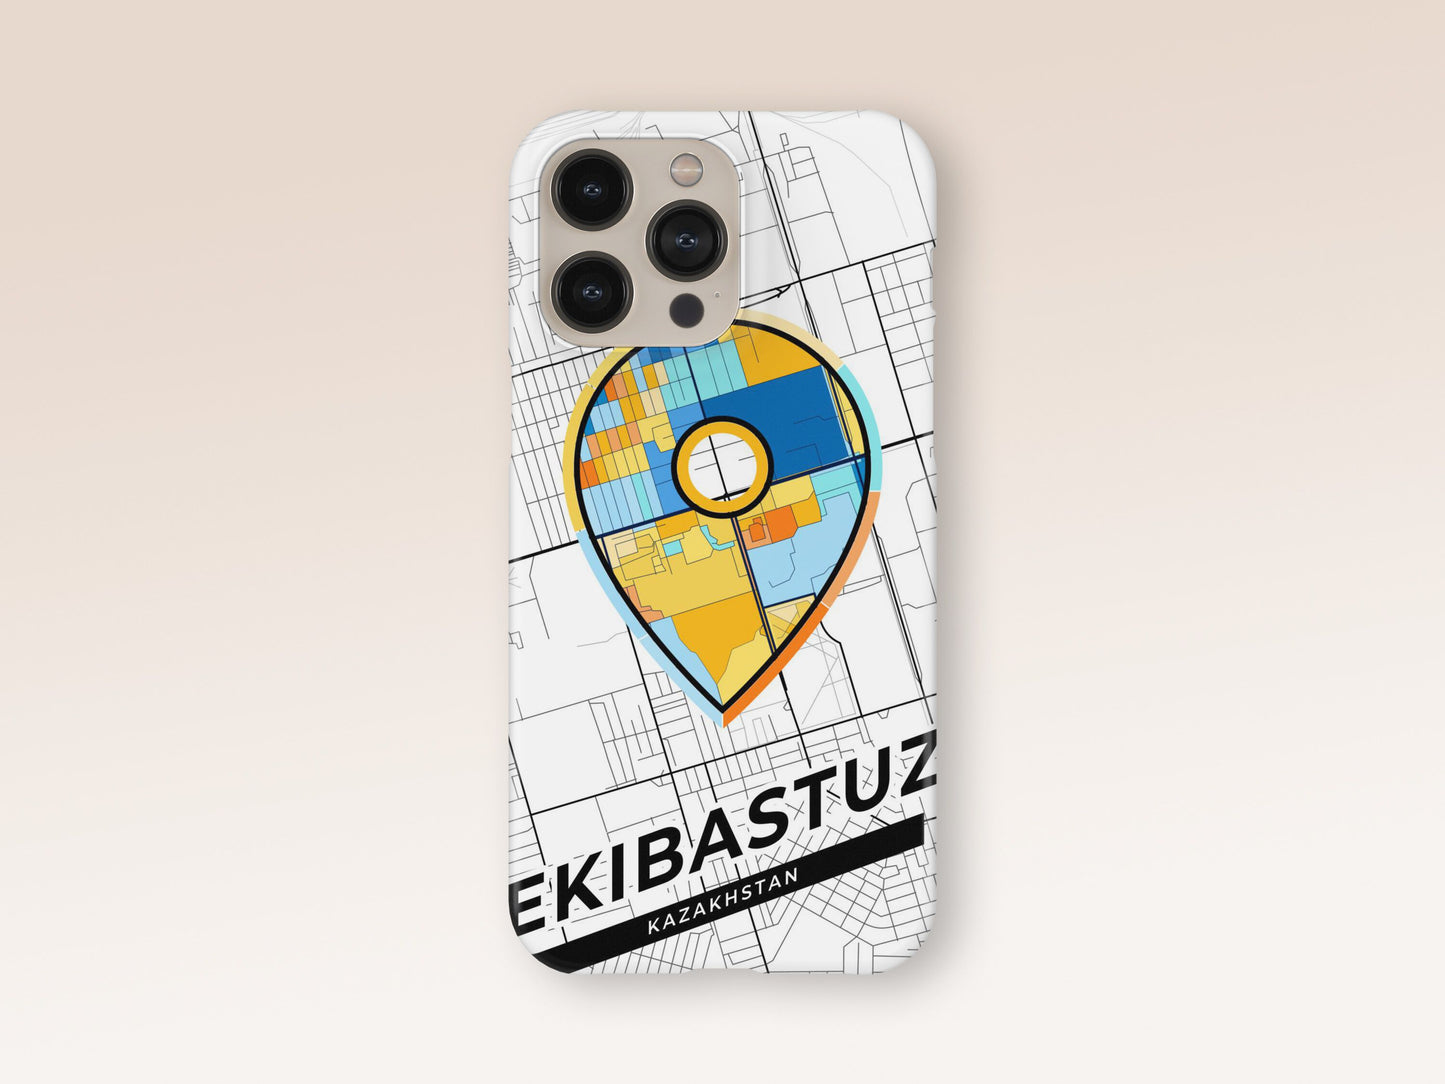 Ekibastuz Kazakhstan slim phone case with colorful icon. Birthday, wedding or housewarming gift. Couple match cases. 1